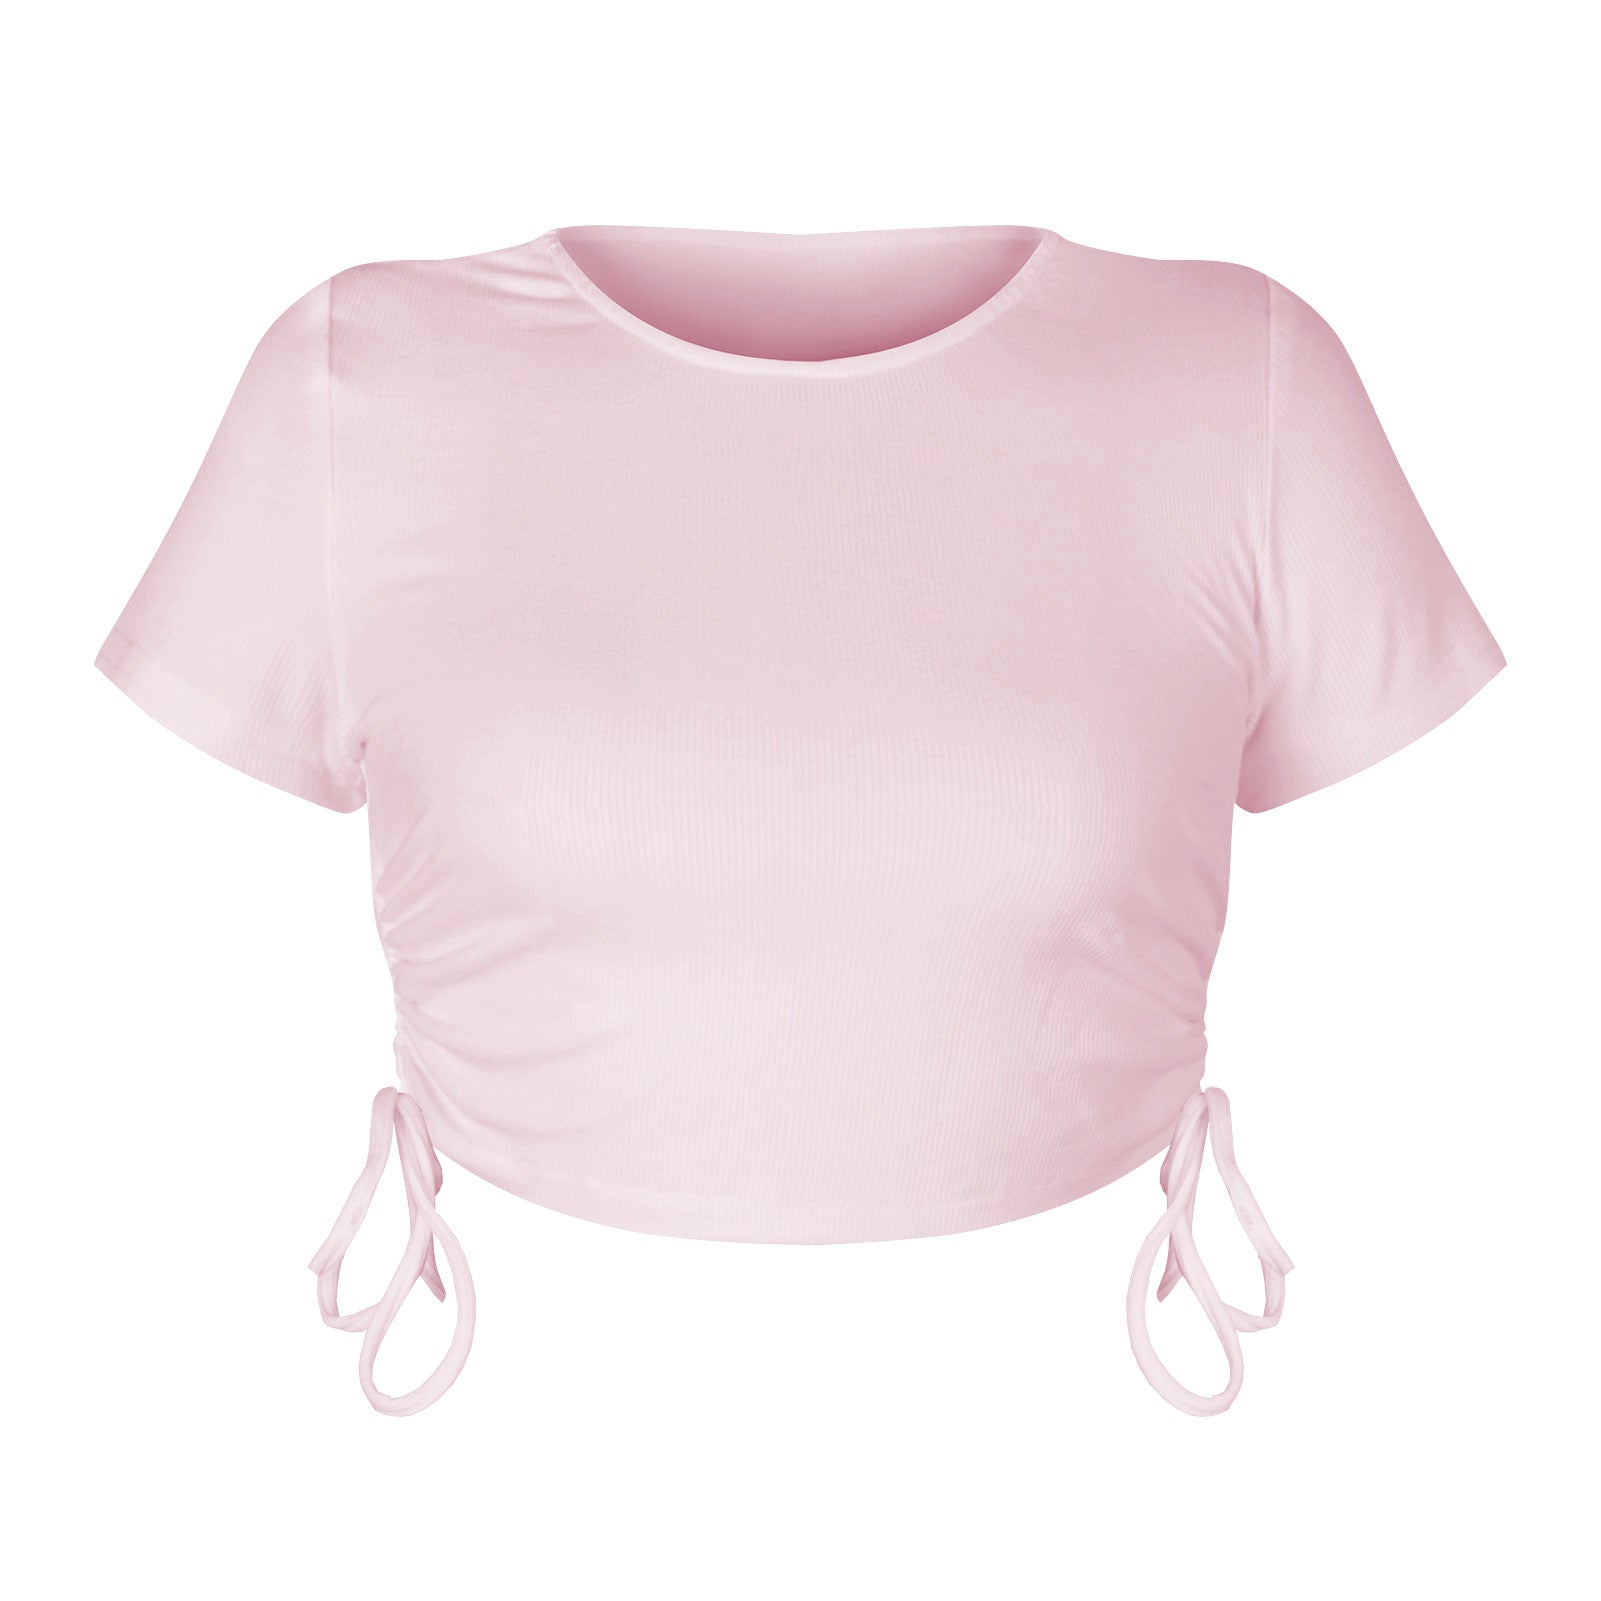 Sexy Round Neck Drawstring Midriff Baring Short Sleeves T Shirts-Shirts & Tops-GSTD005-S-Free Shipping Leatheretro